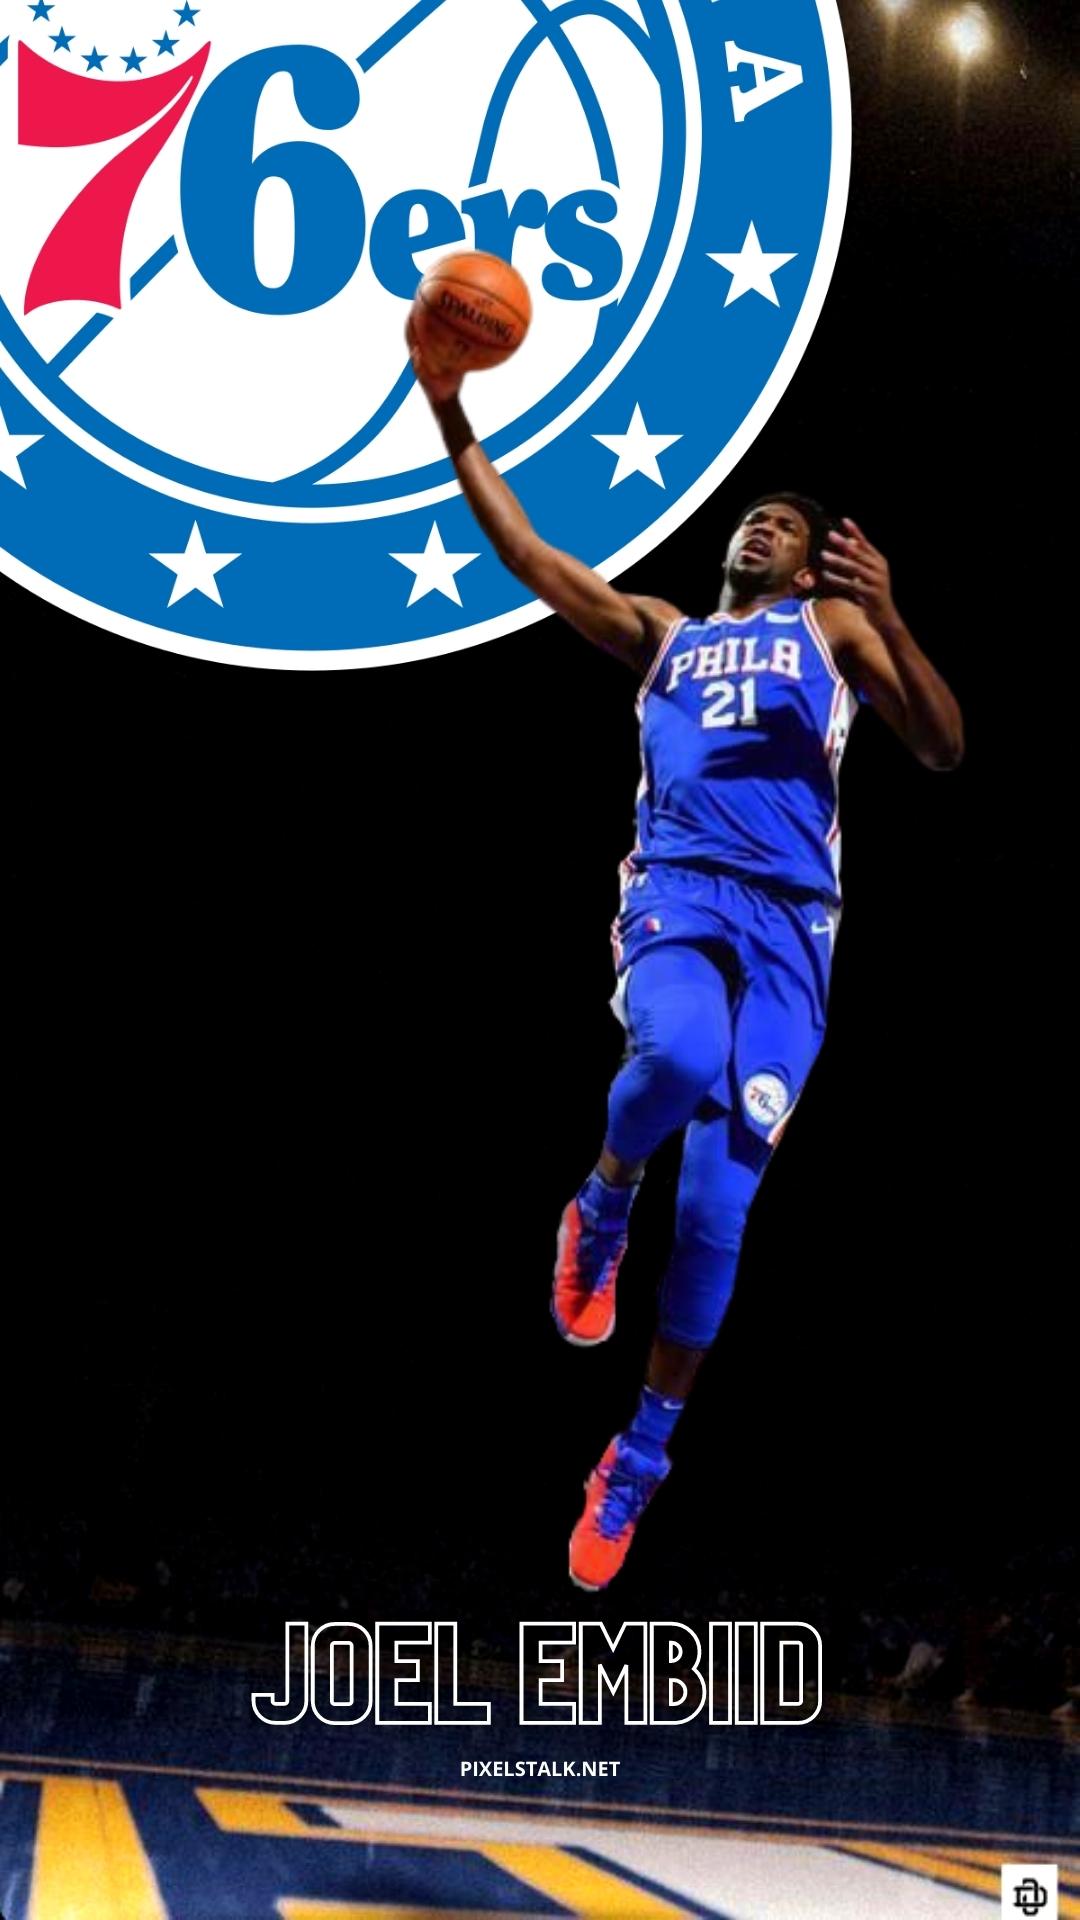 Joel Embiid  Basketball  Sports Background Wallpapers on Desktop Nexus  Image 2477496